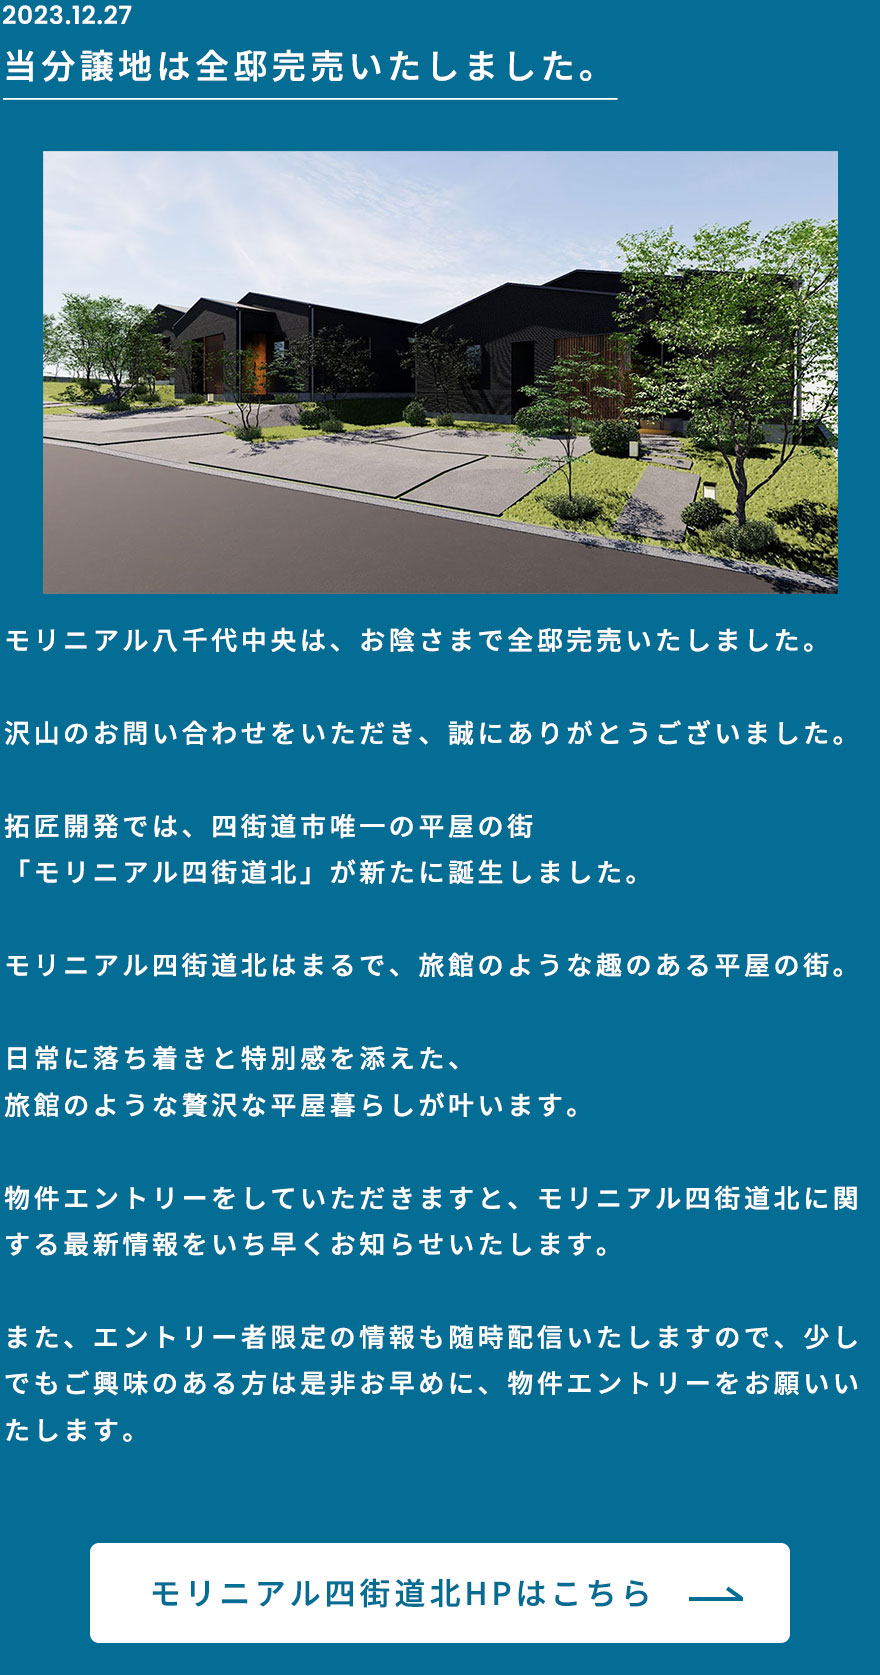 NEWS 千葉県八千代市萱田町に平屋の街 全36邸「モリニアル八千代中央」が誕生します。ご見学はこちら